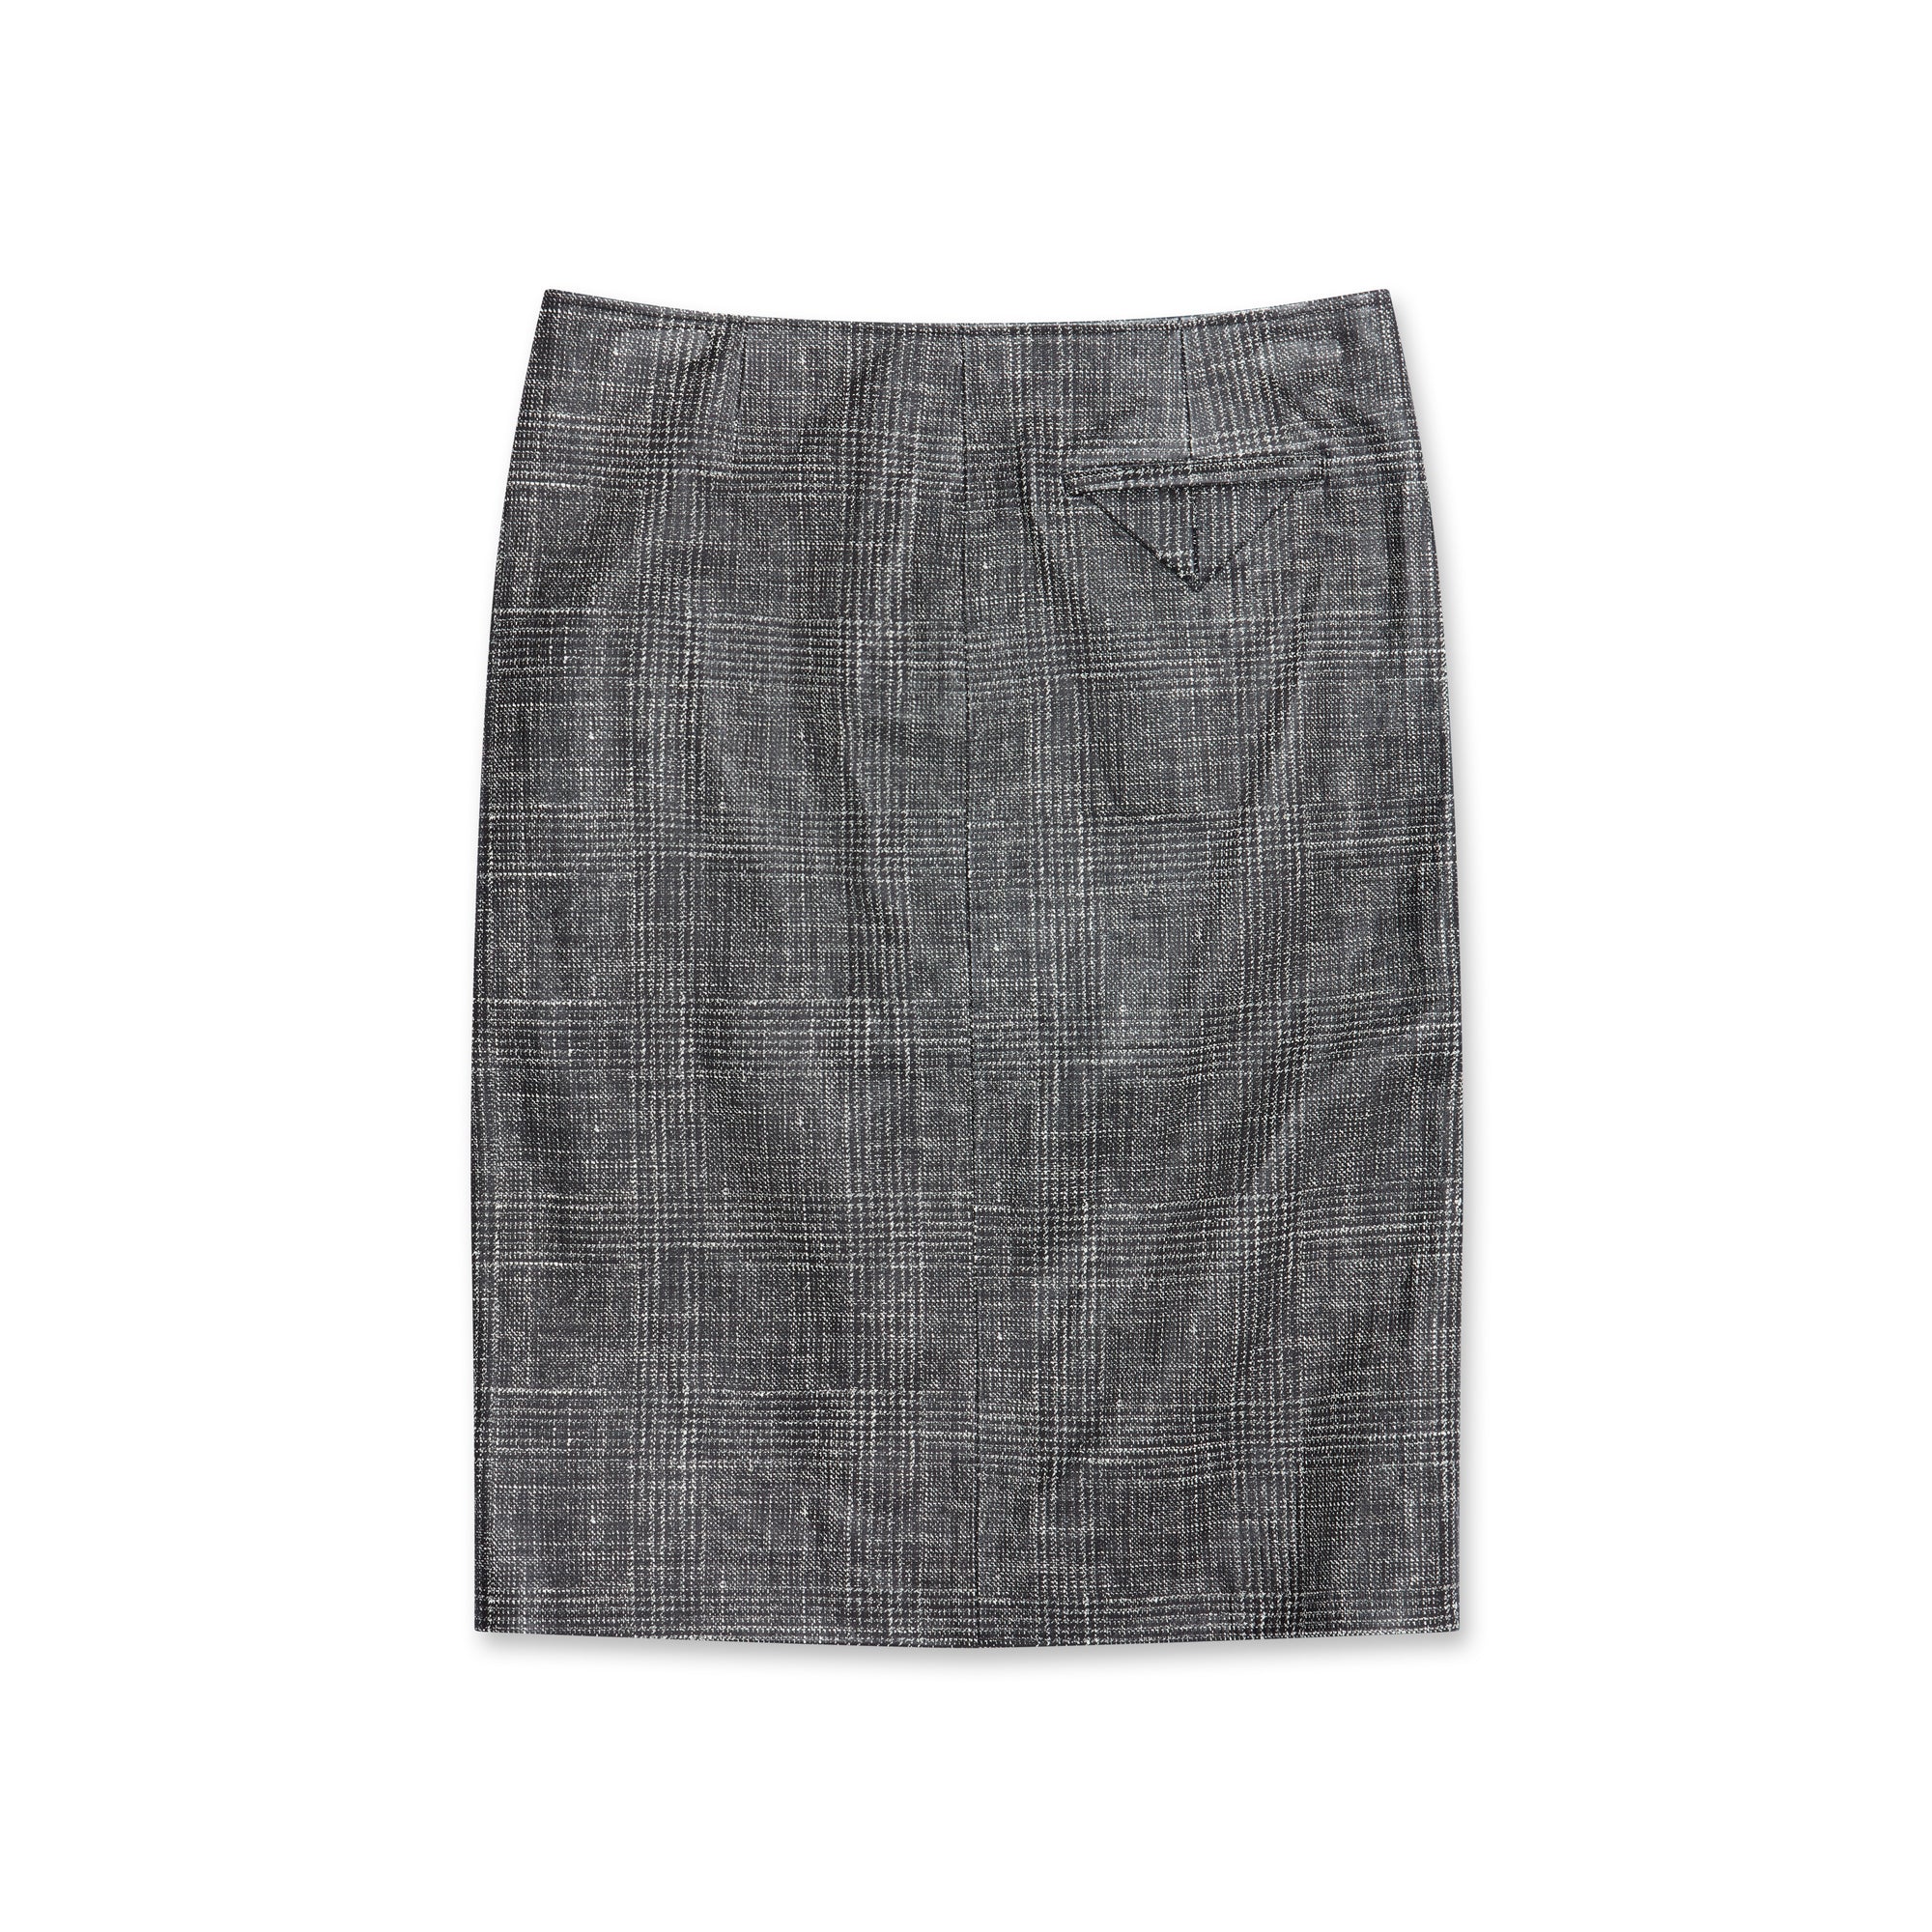 Bottega Veneta - Women’s Printed Leather Skirt - (Black/White) view 2